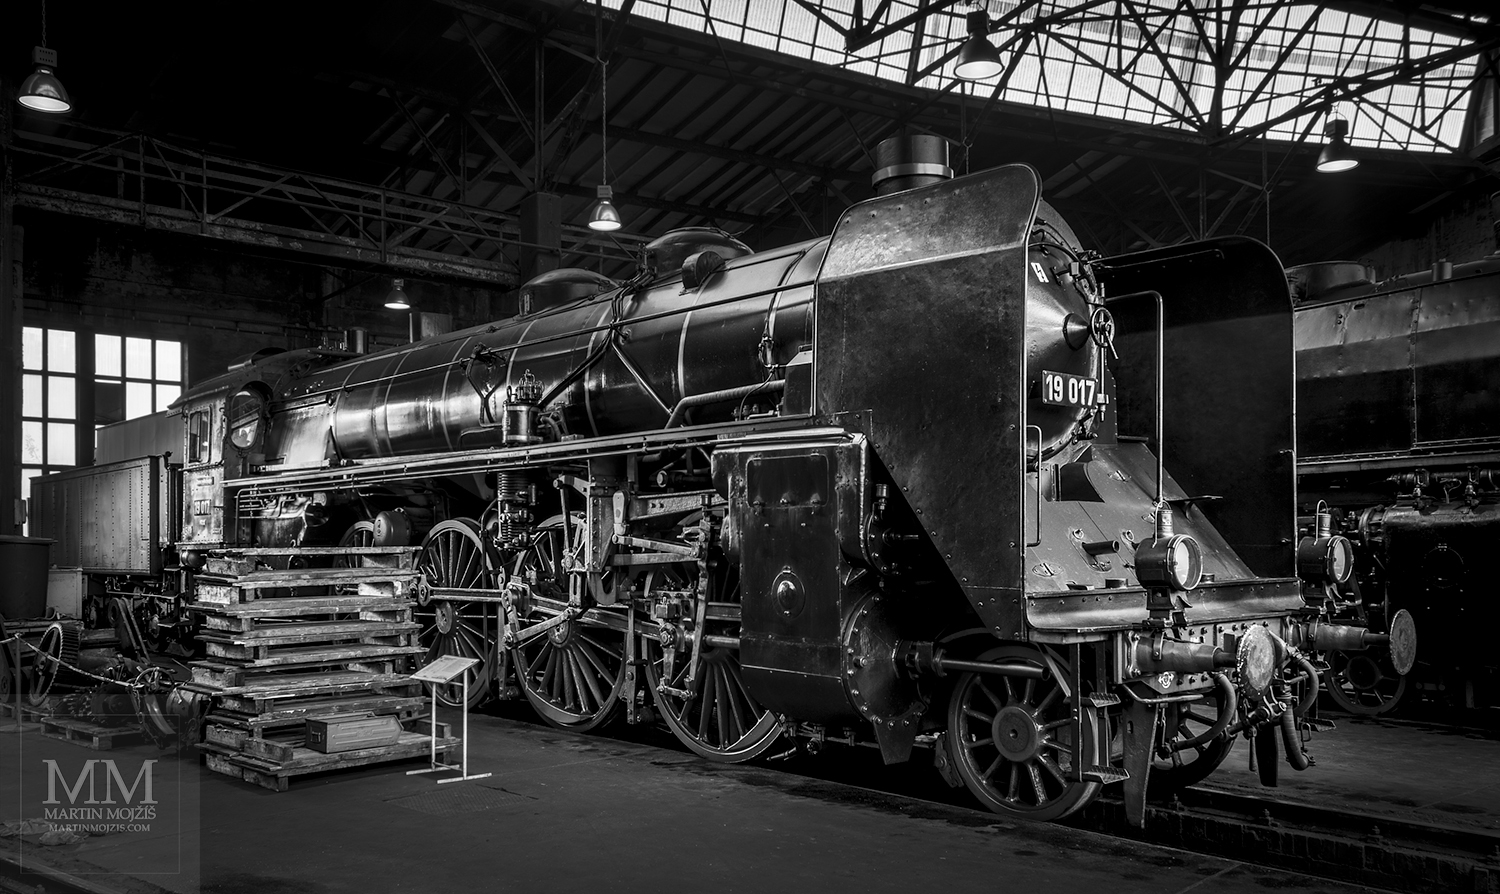 A steam locomotive 19 017. Eisenbahnmuseum Dresden – Dresden Railway Museum.